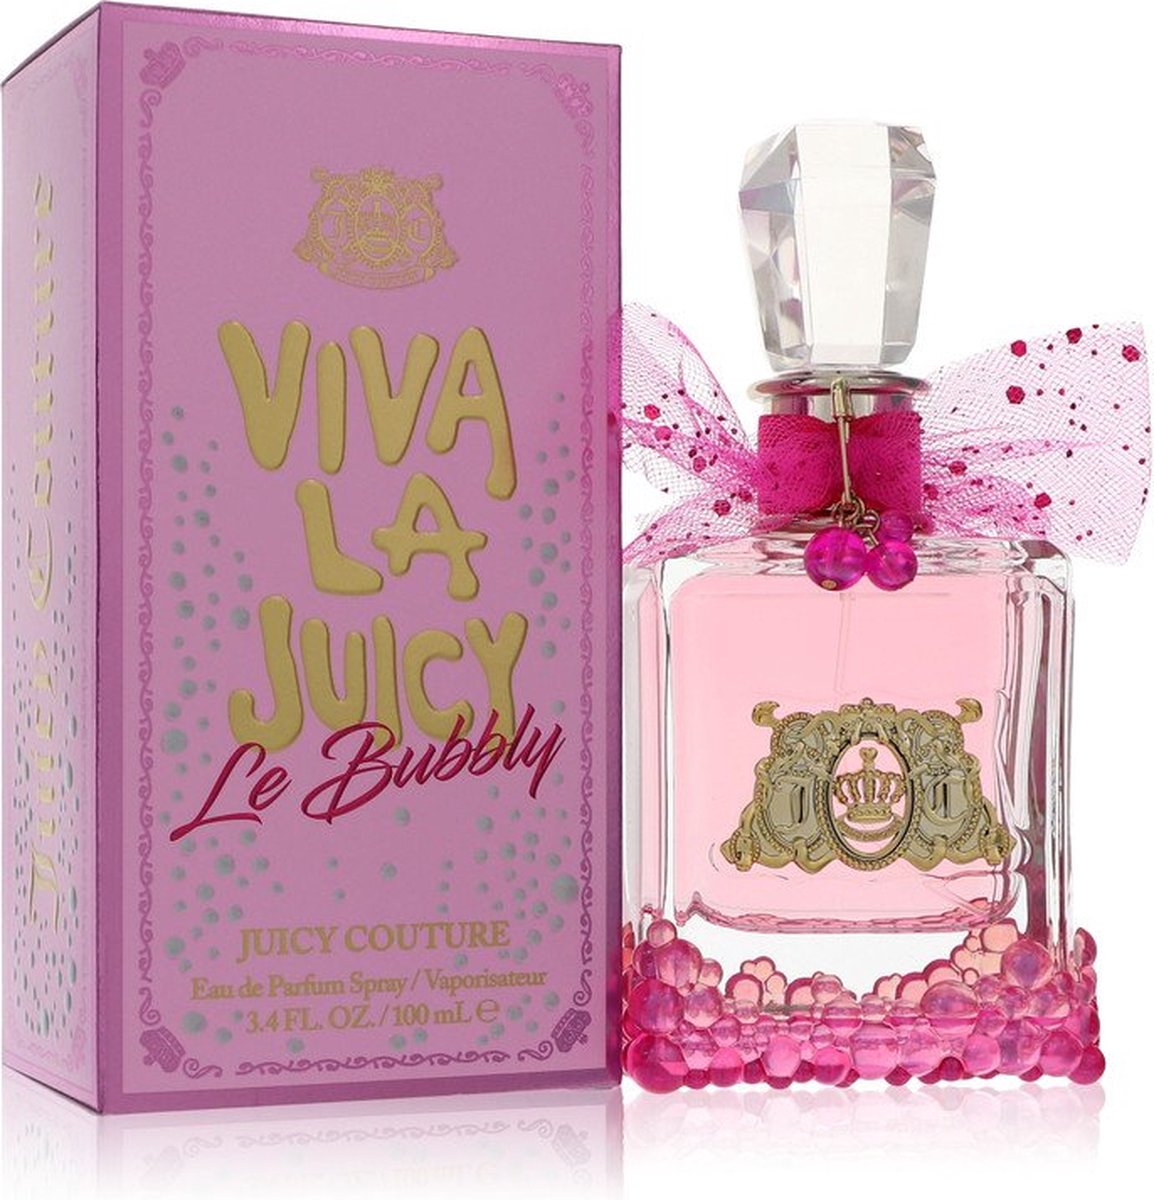 Juicy Couture Viva La Juicy Le Bubbly Eau De Parfum Spray 100 Ml For Women